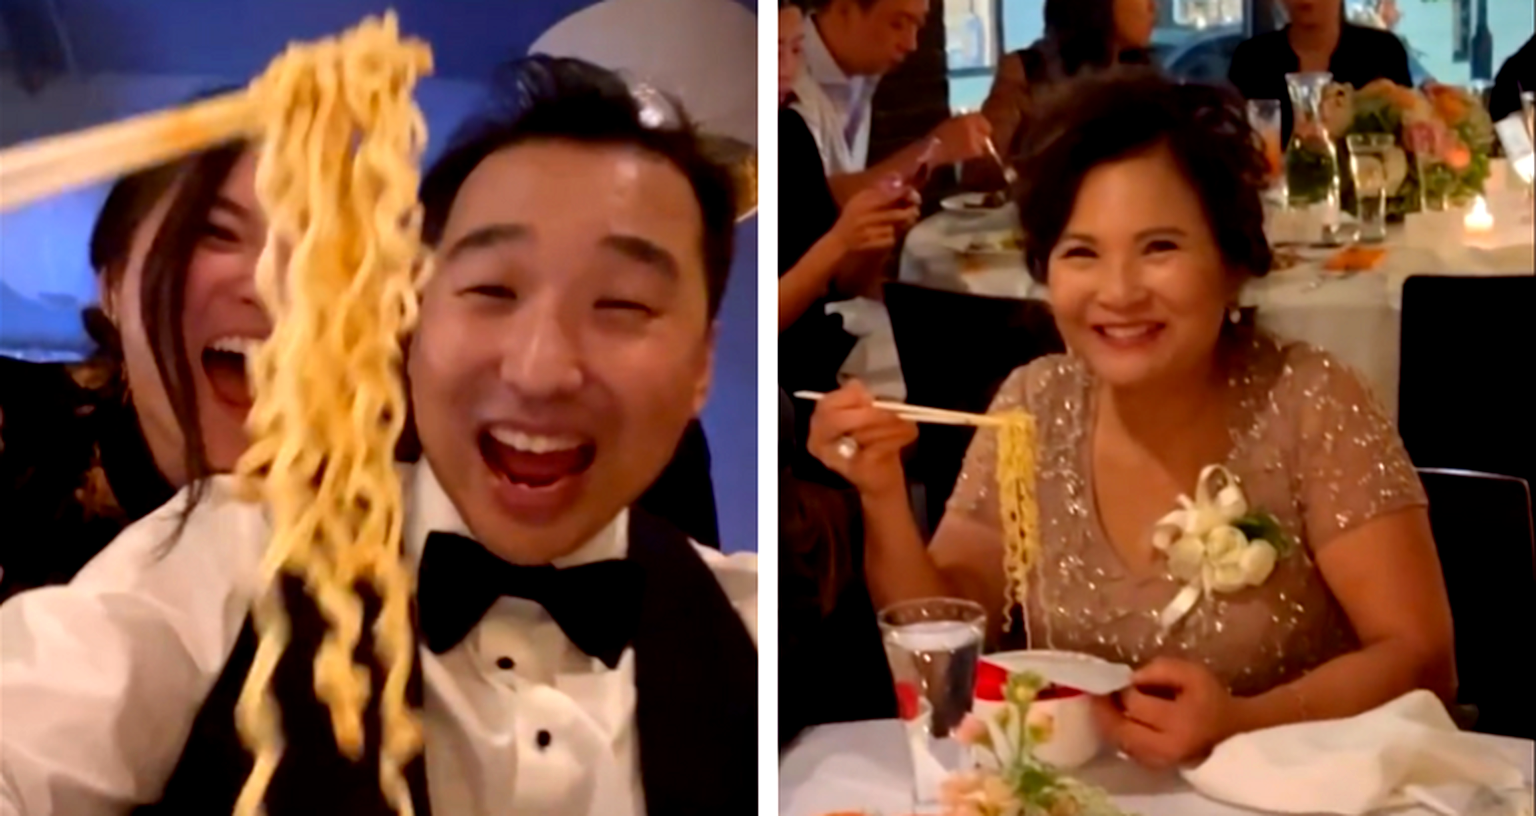 Name a better combo: Asian wedding with ramen bar is a hit on TikTok